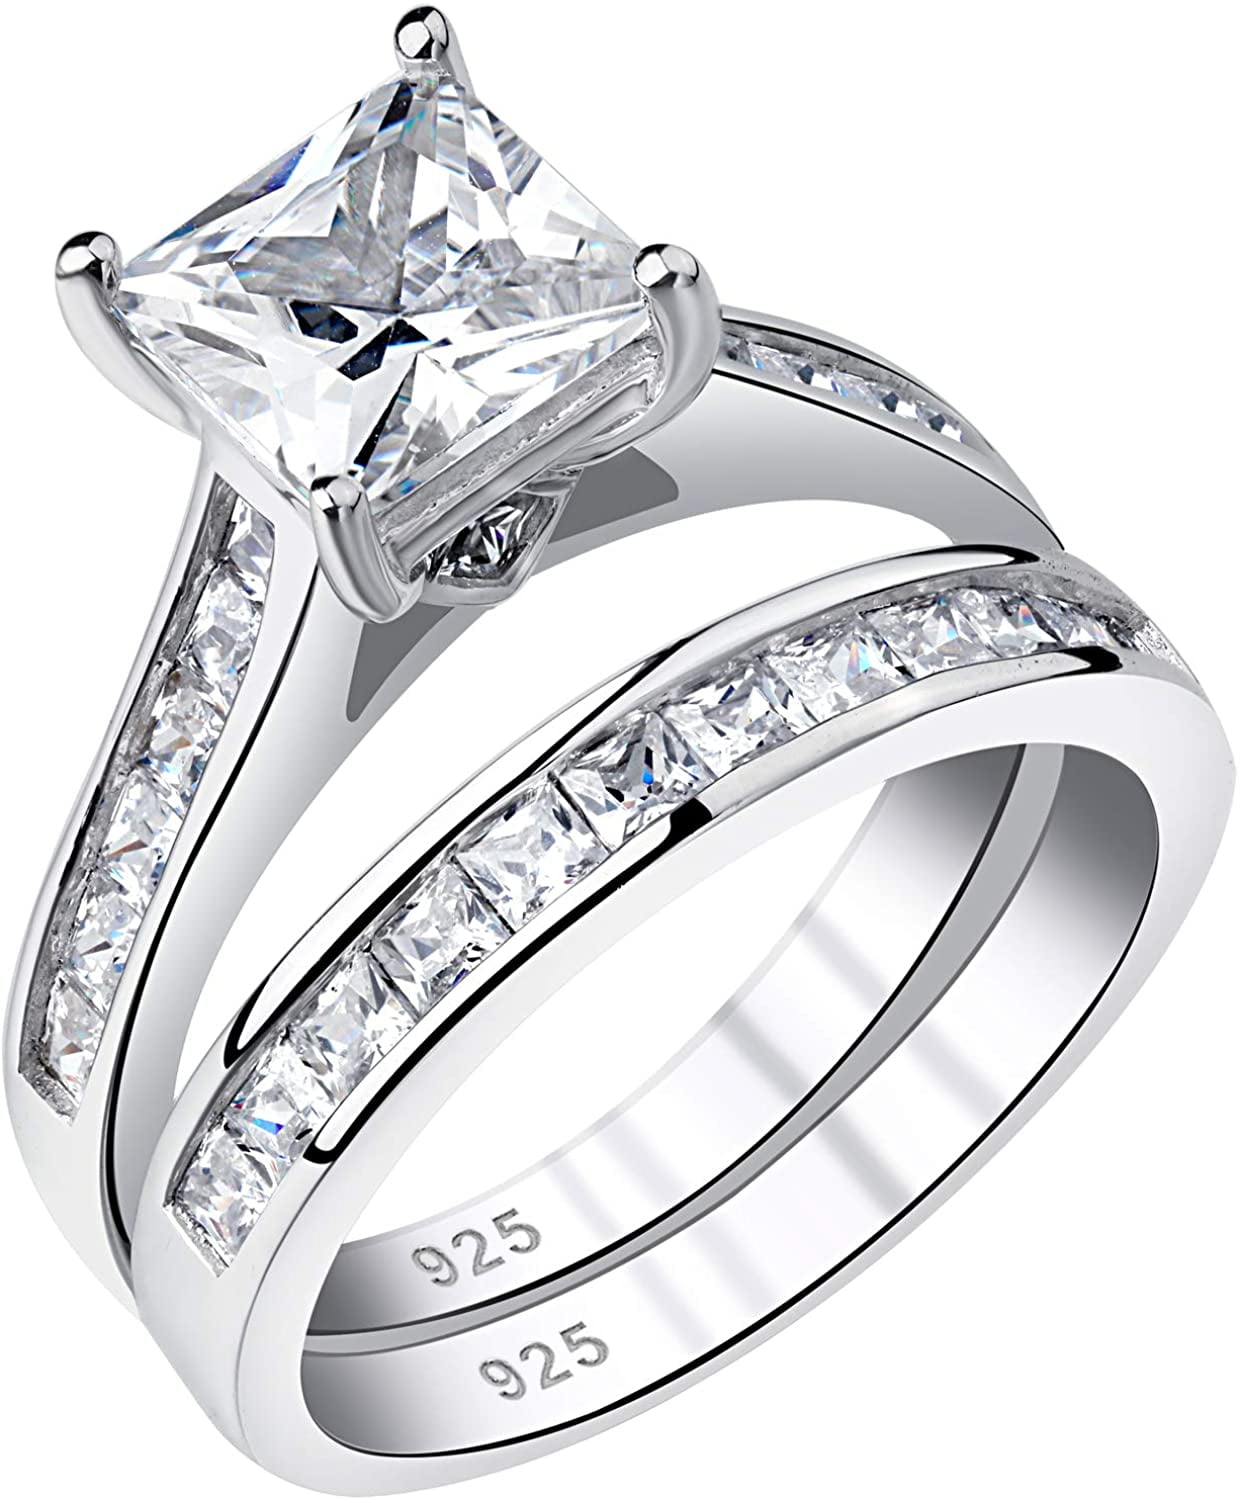 Women’s 1.8 CTW Princess Cut 925 Sterling Silver CZ Wedding Engagement Ring Set 